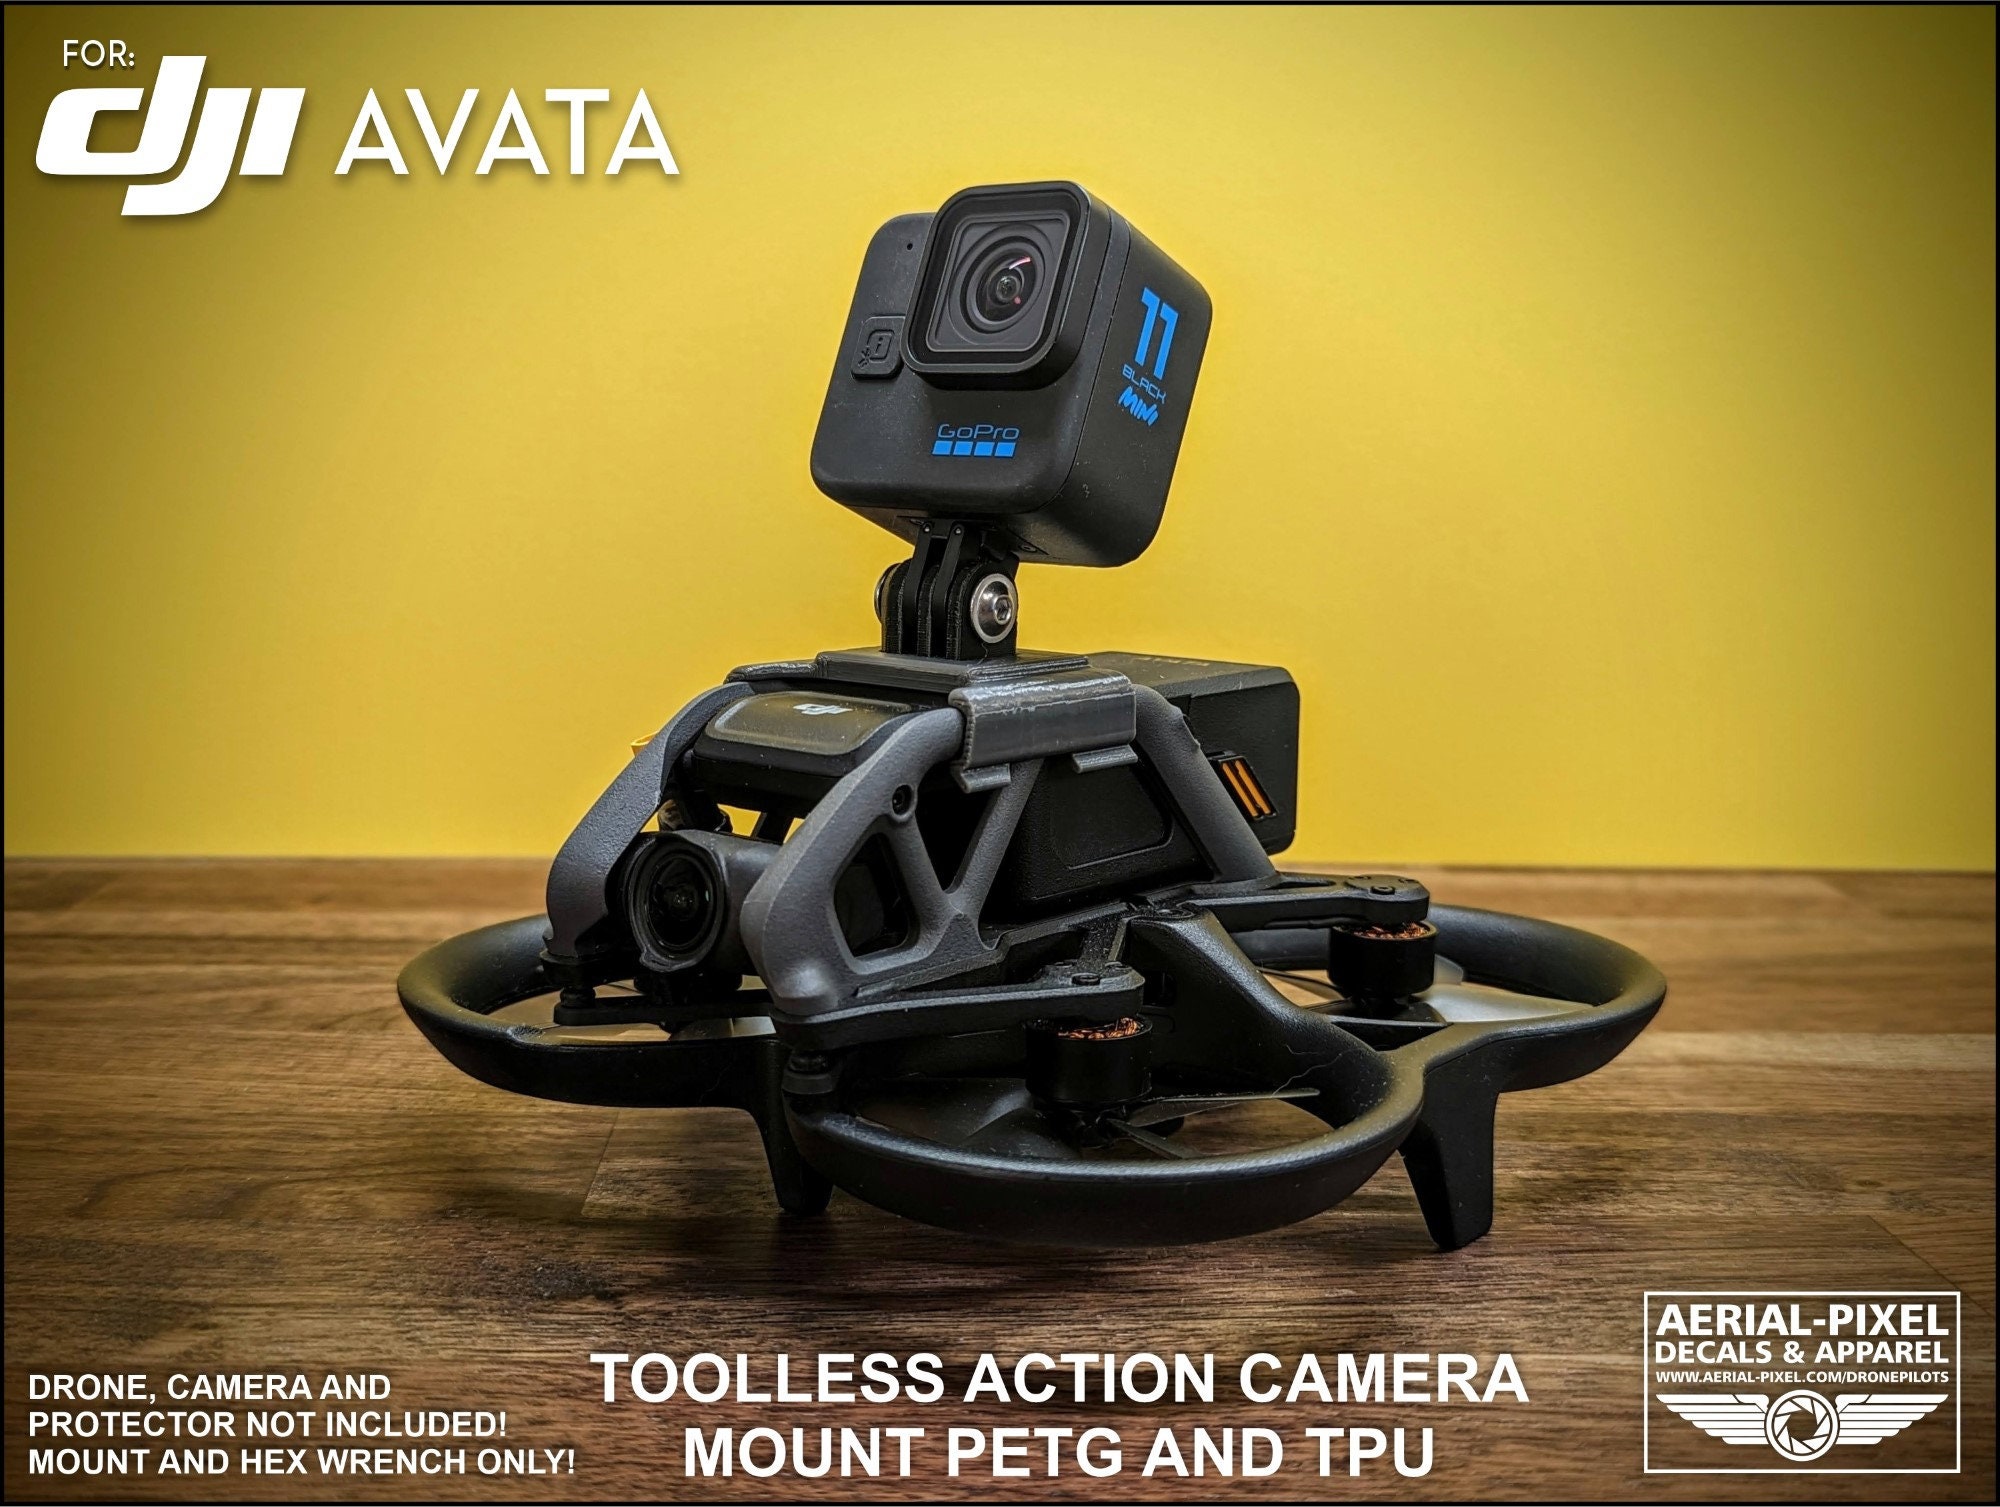 DJI AVATA Toolless Action Camera Choose From 8 - Etsy